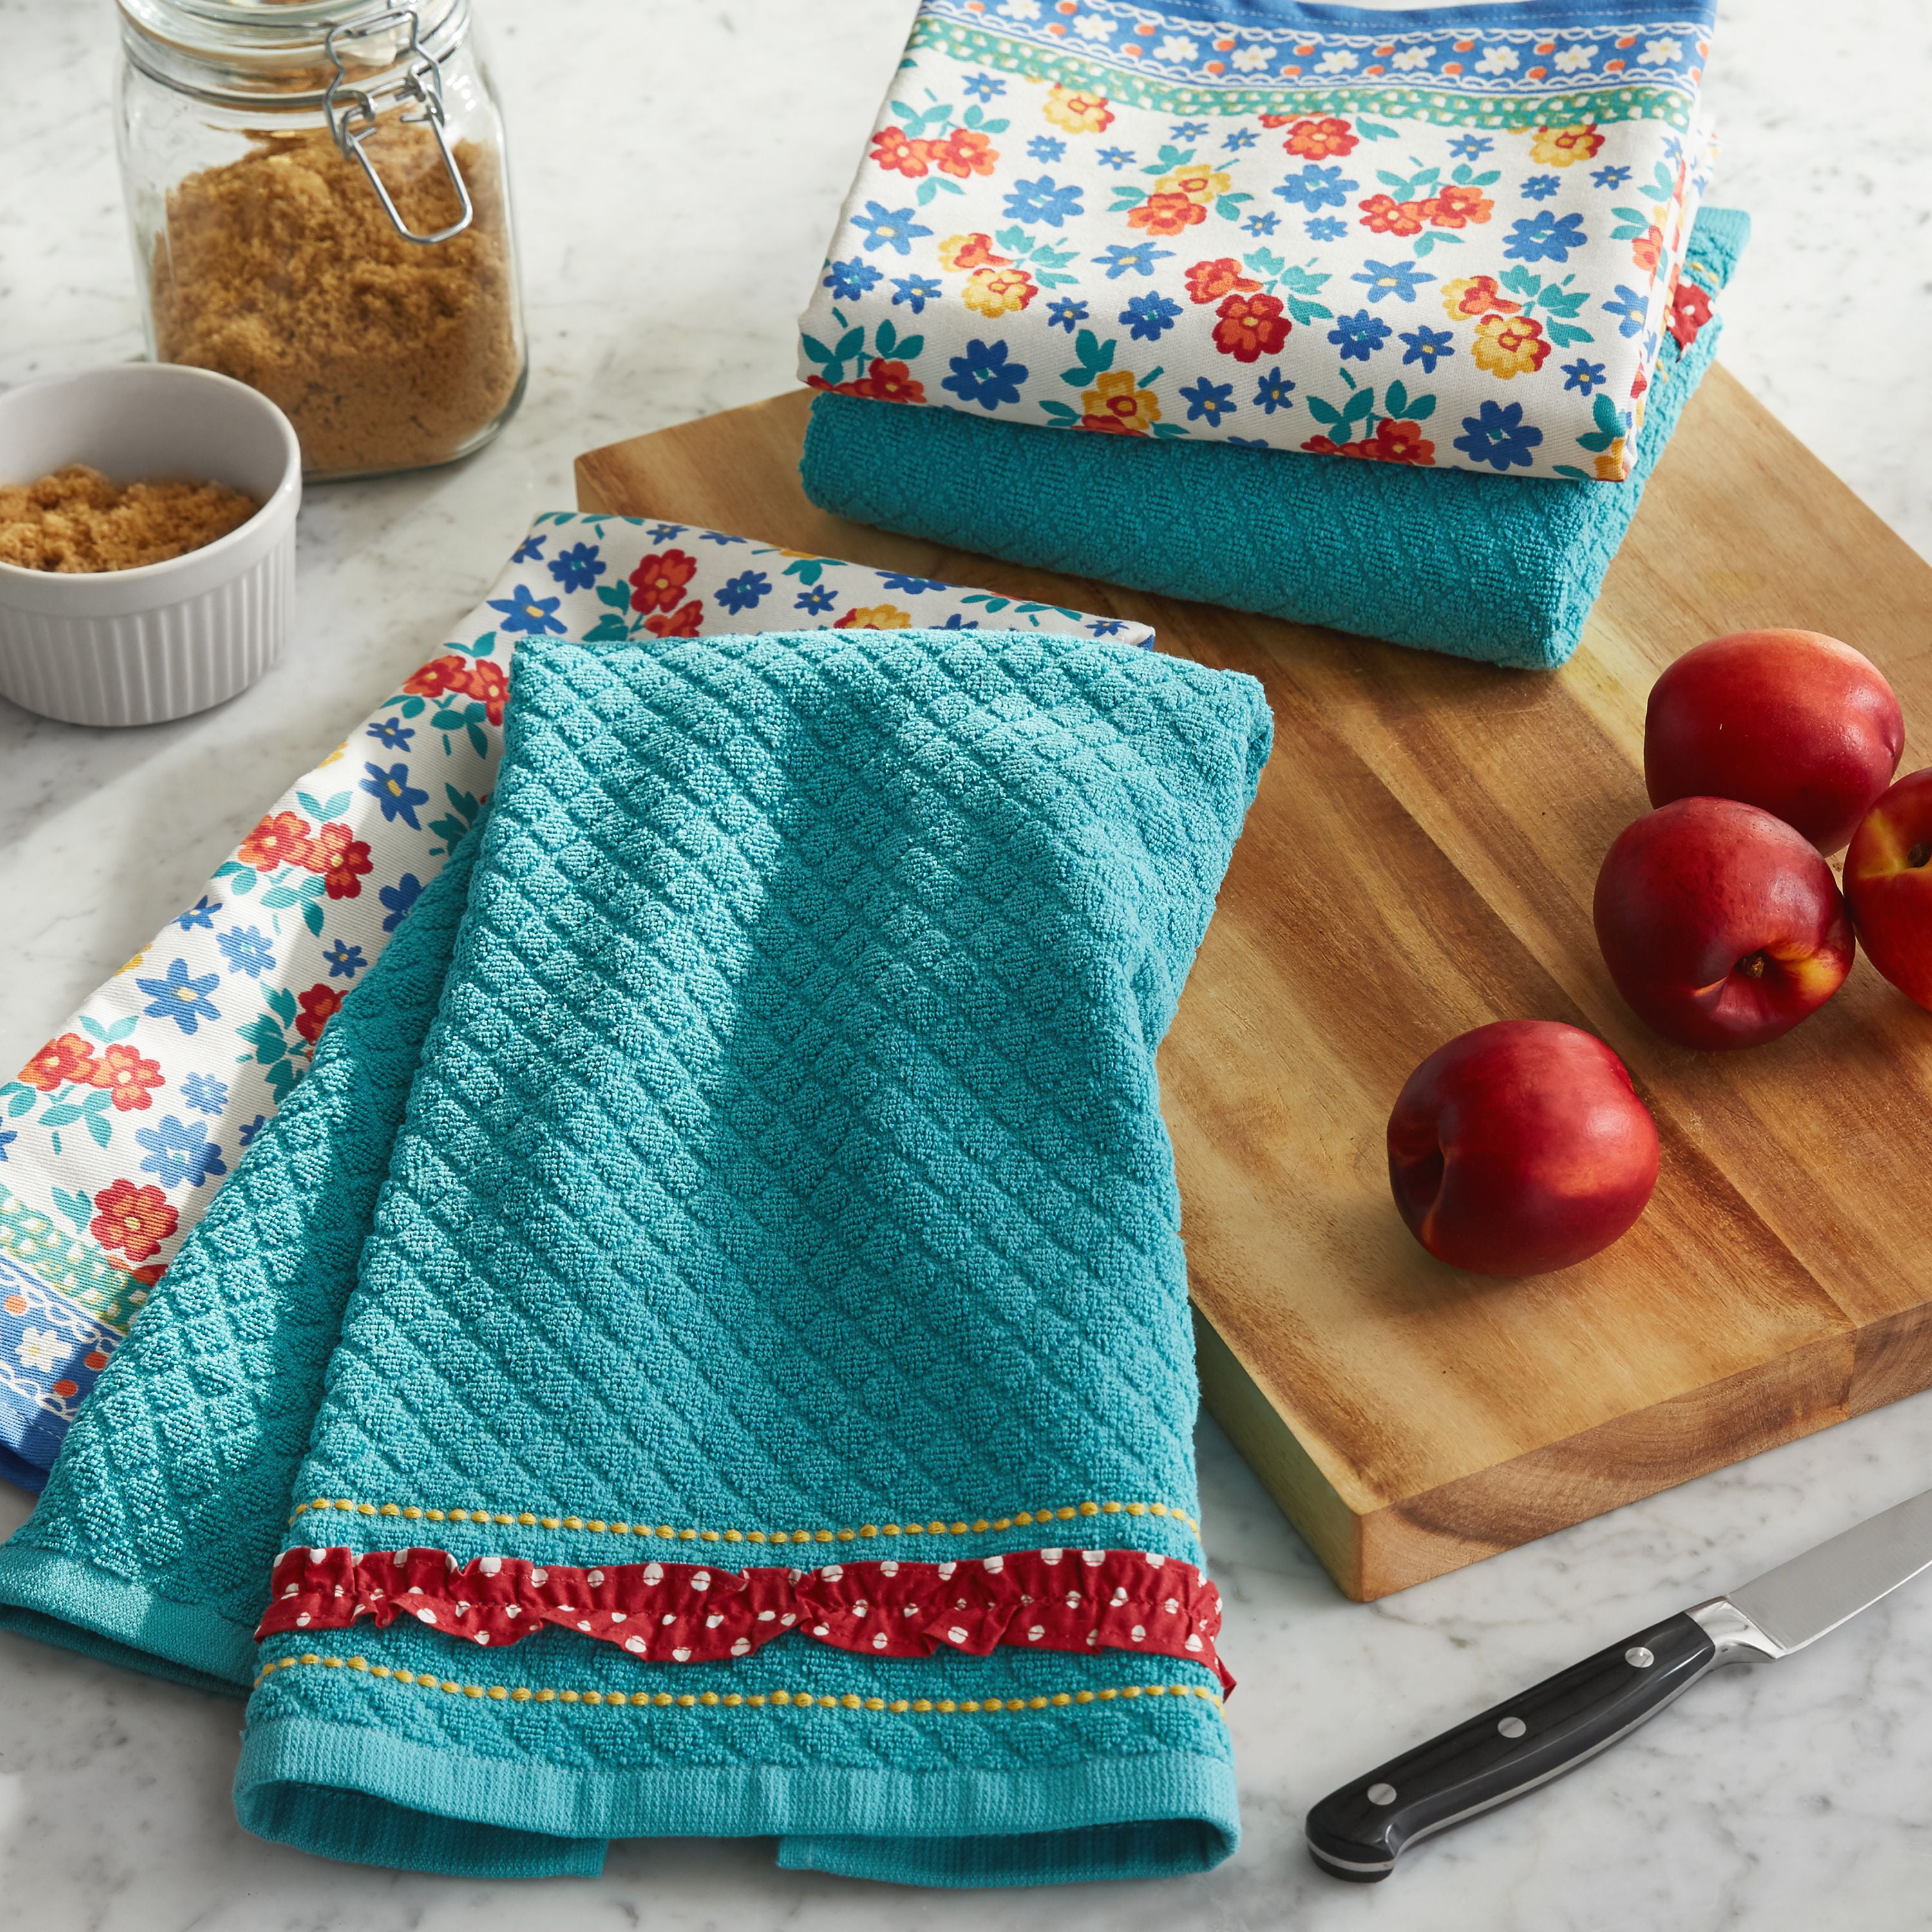 Set Pioneer Woman Crochet Top Kitchen Towels Sweet Romance Floral 4 Gray 